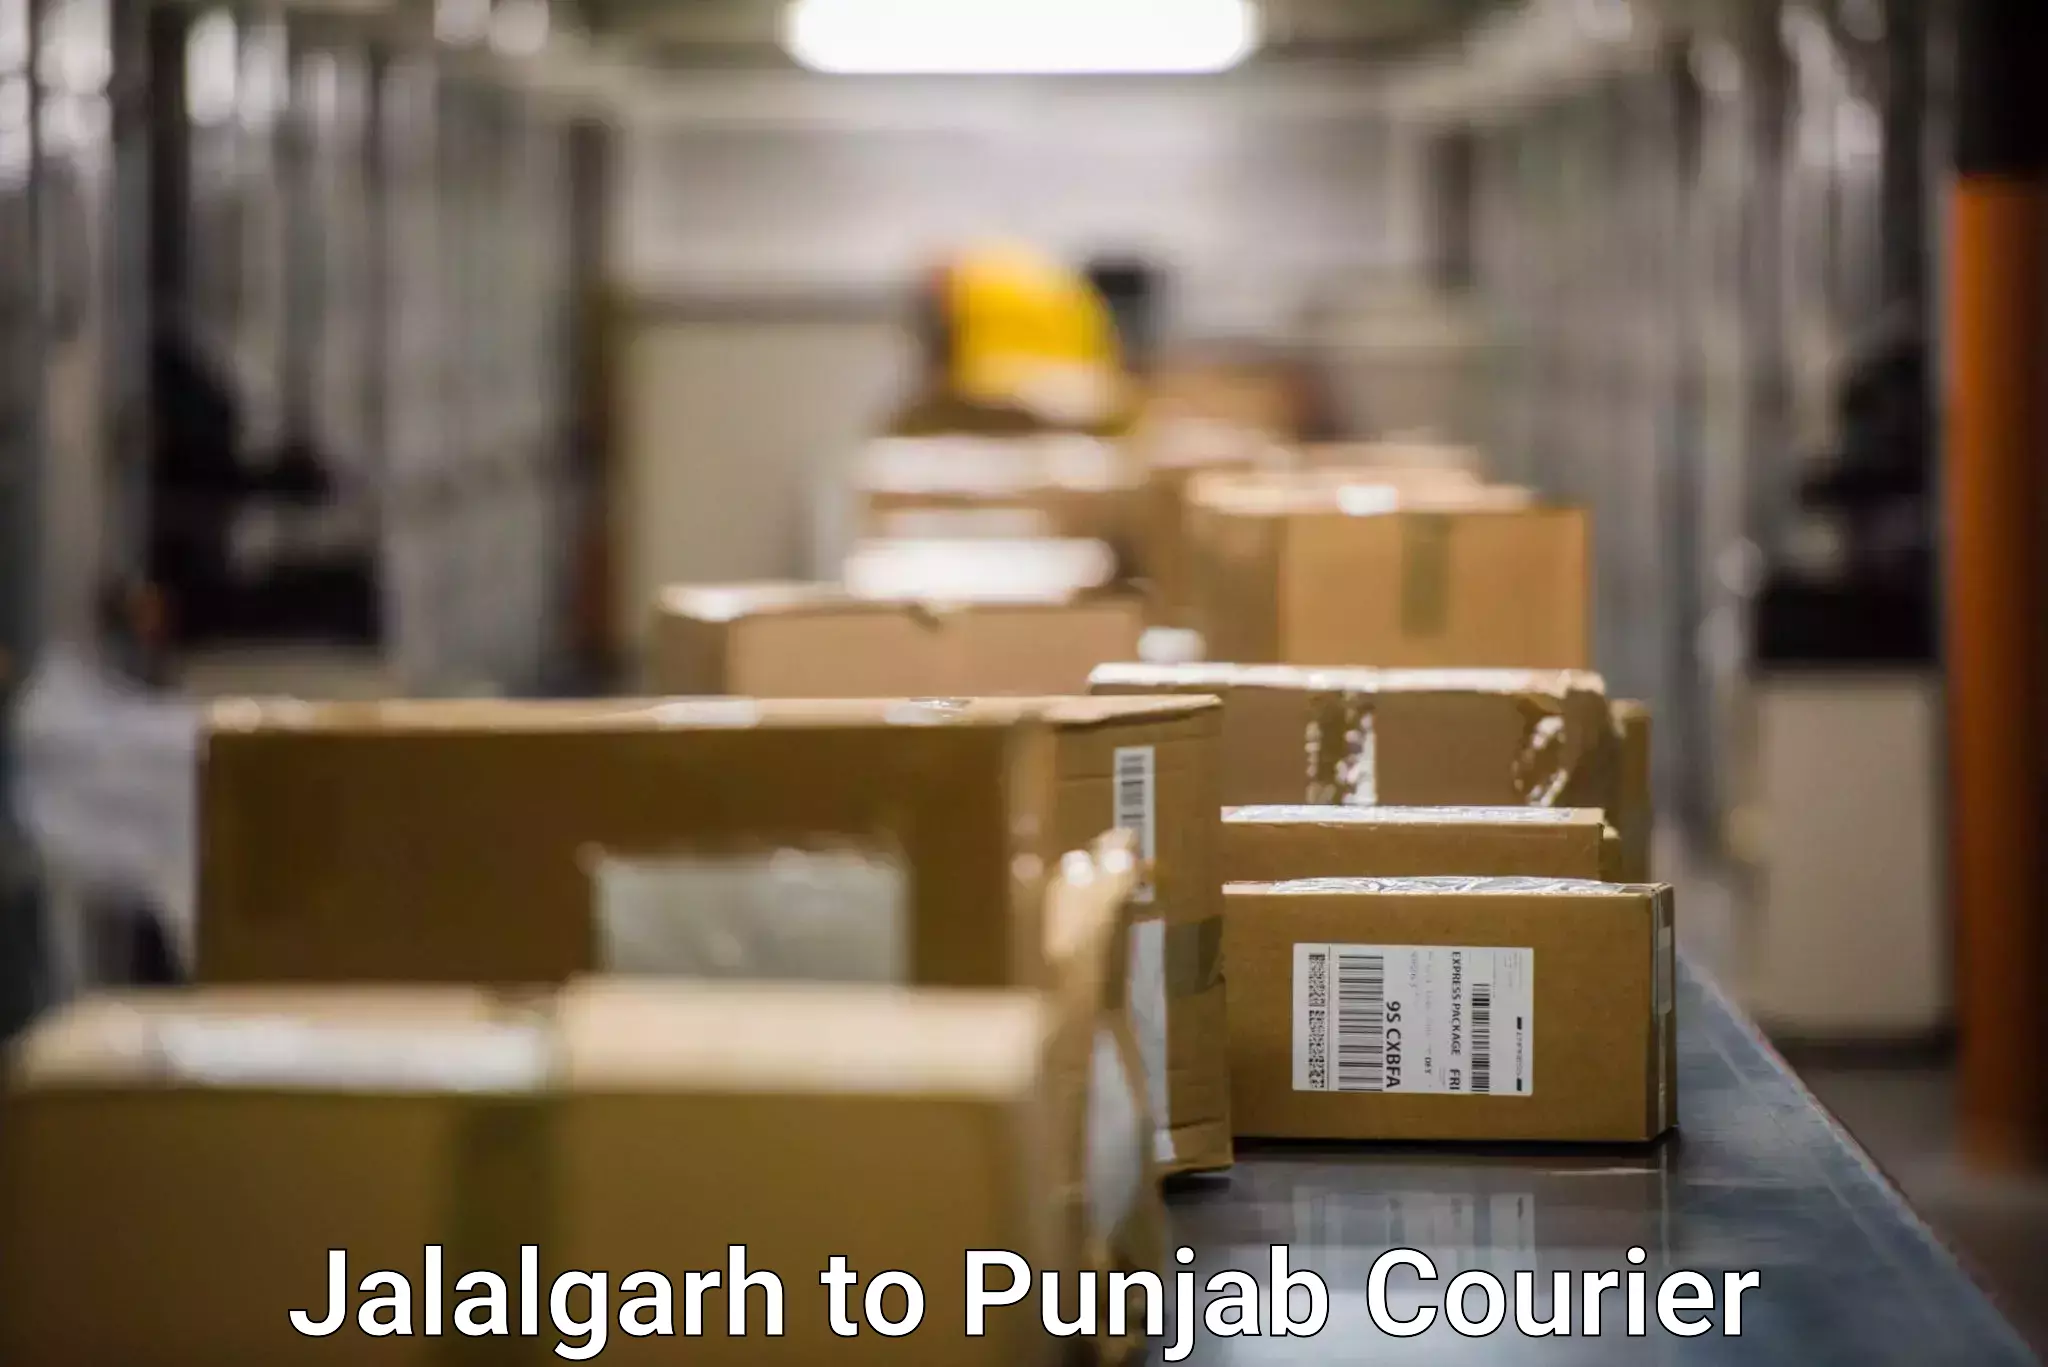 Courier service partnerships Jalalgarh to Phagwara